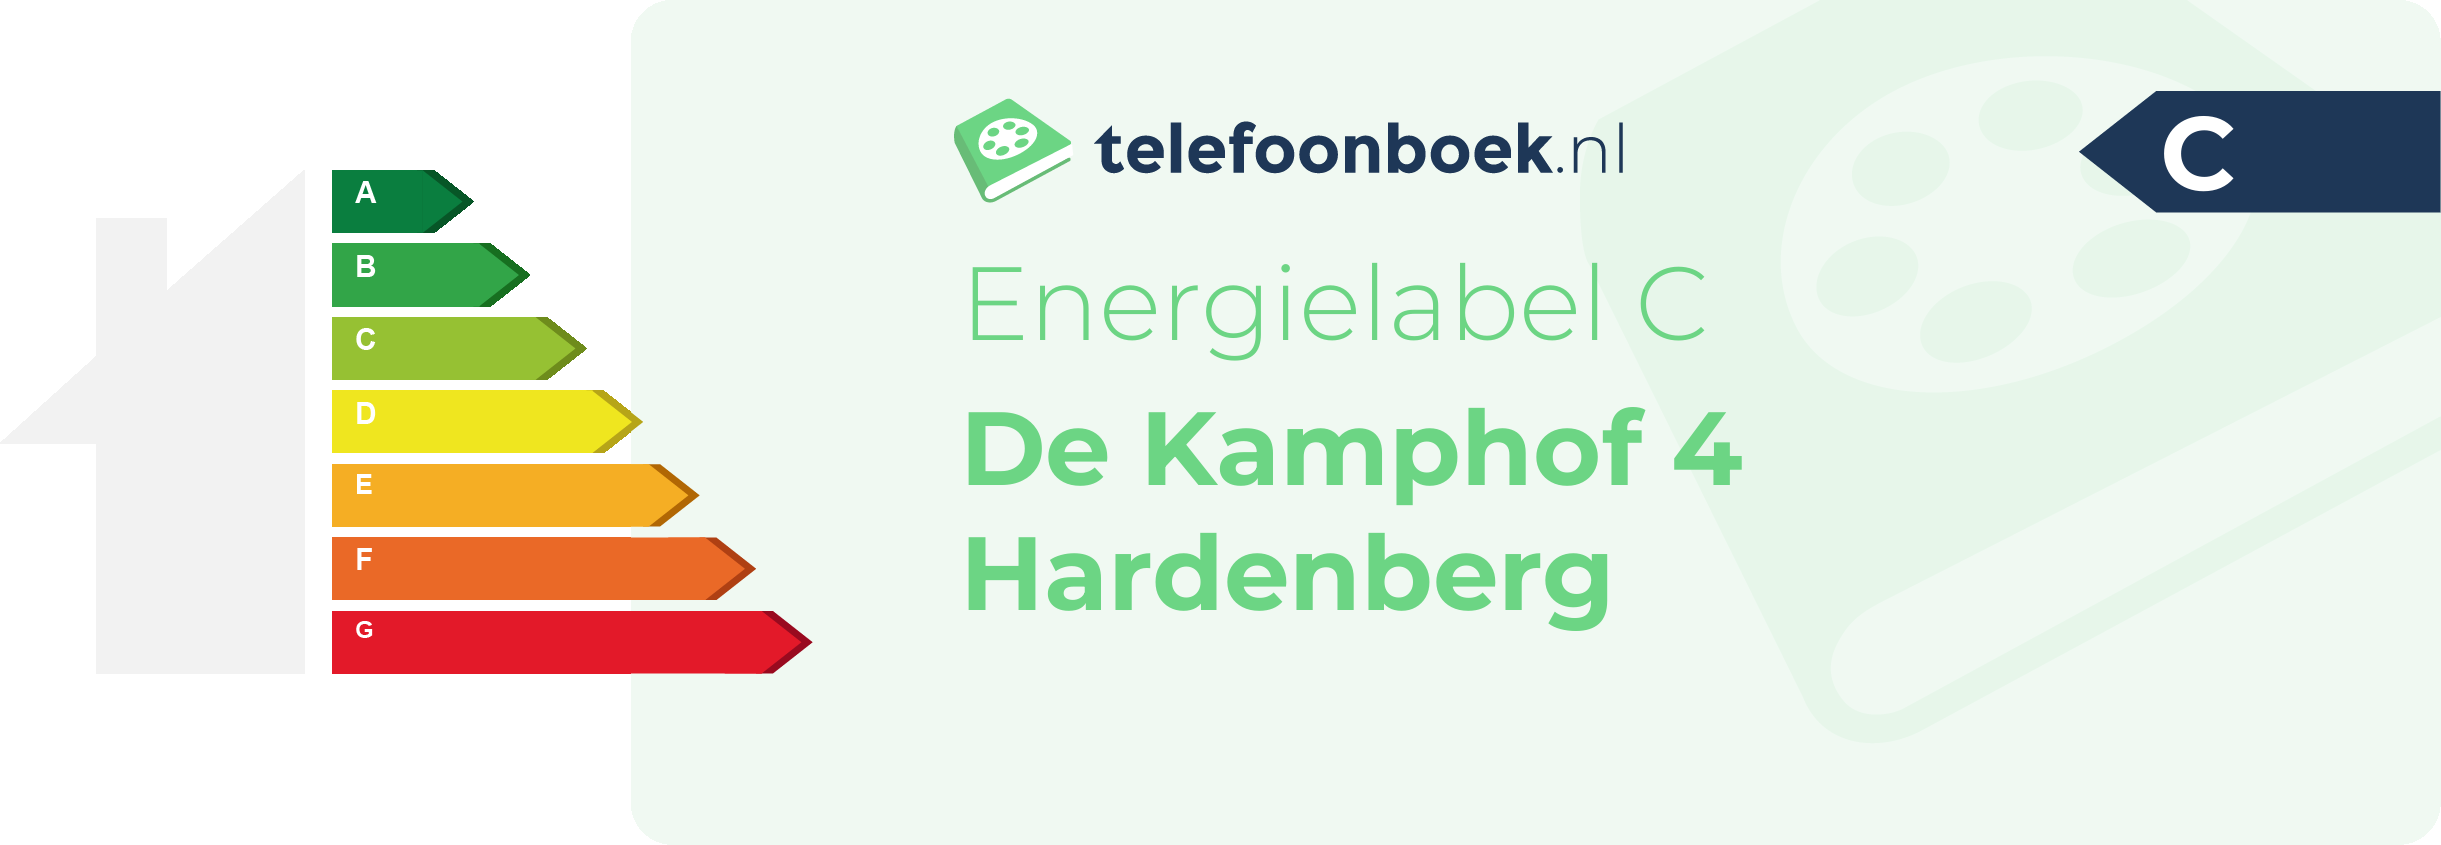 Energielabel De Kamphof 4 Hardenberg